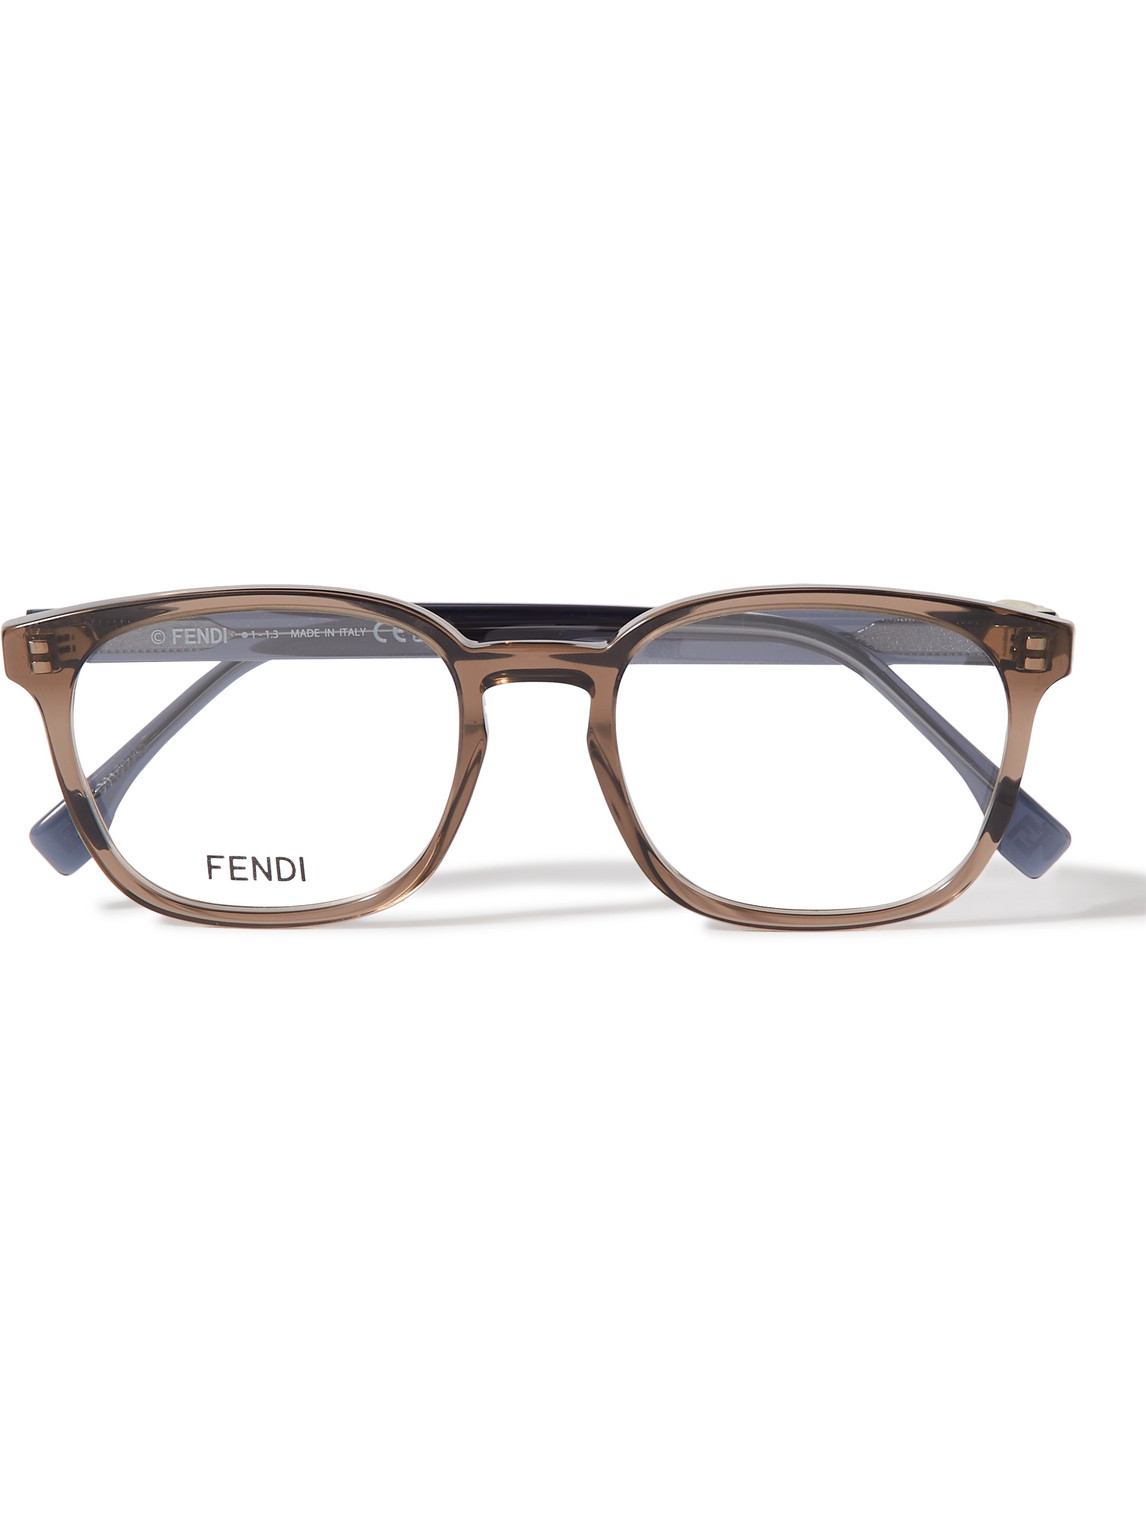 Fendi D-frame Acetate Optical Glasses In Brown